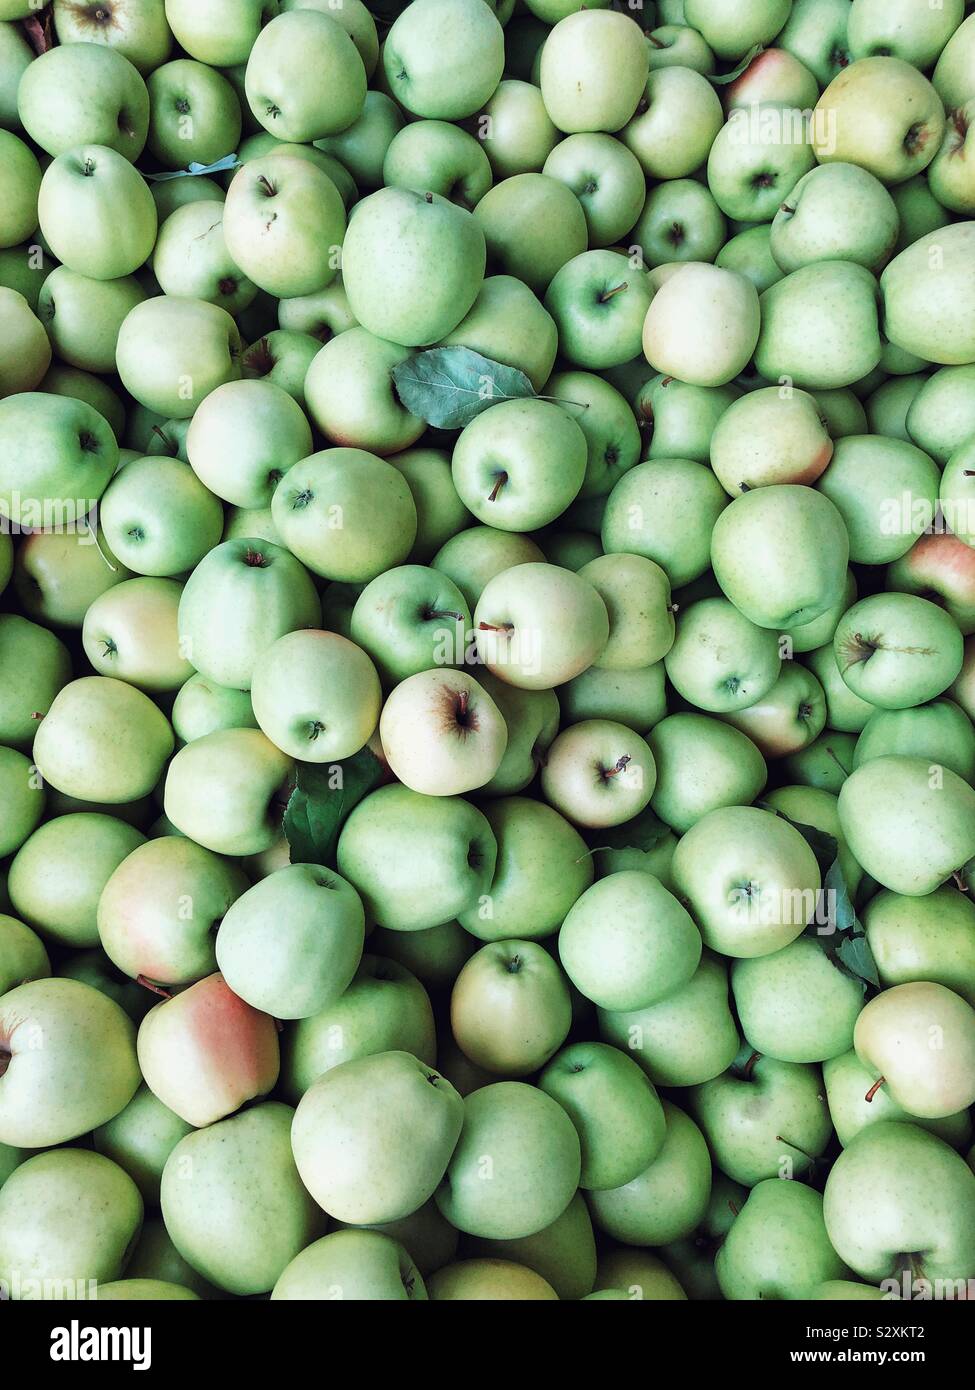 Plentiful harvest of Granny Smith apples Stock Photo